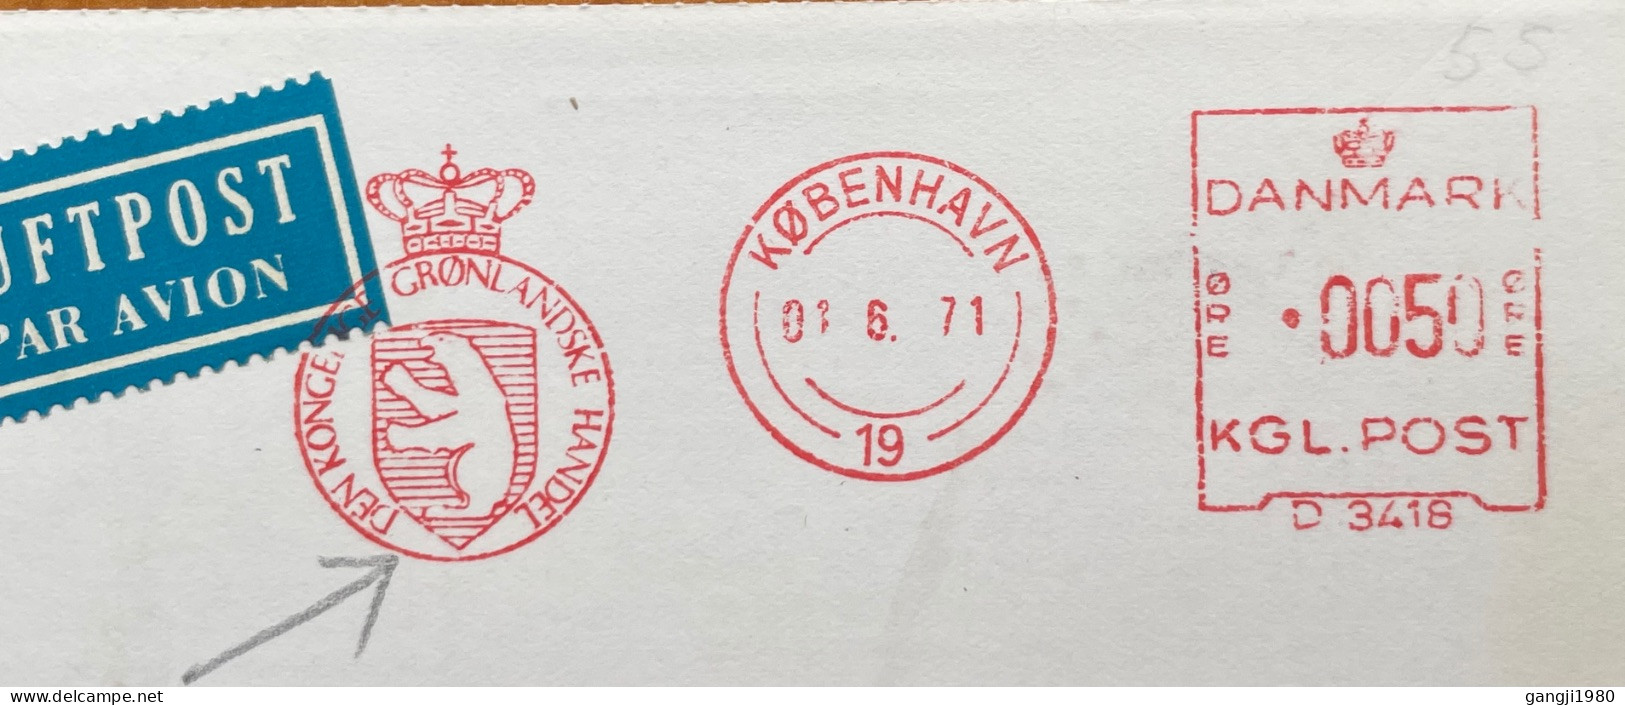 GREENLAND-DENMARK 1971, MACHINE SLOGAN, BEAR ANIMAL, METER SLOGAN ON PHILATELIC INFORMATION CARD, USED TO USA. - Covers & Documents